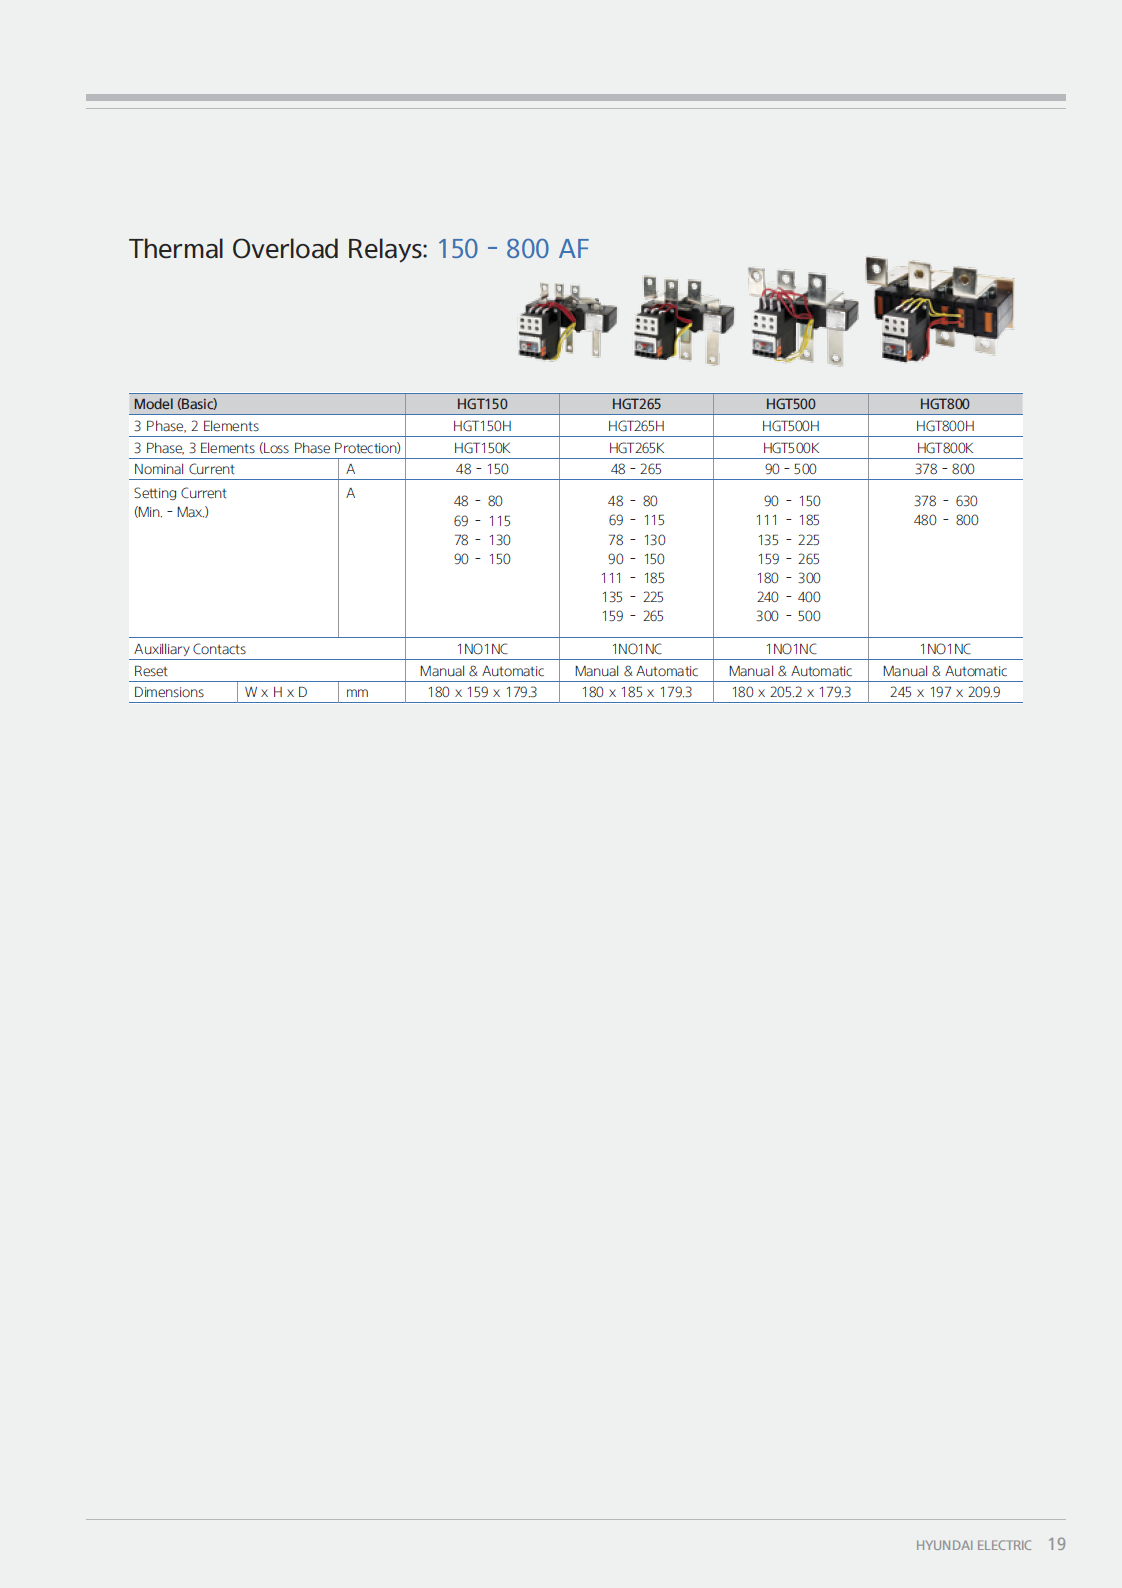 Hyundai Marine Magnetic Contactors Accessories - Control Coil HGCOL150 For HGC115/130/150